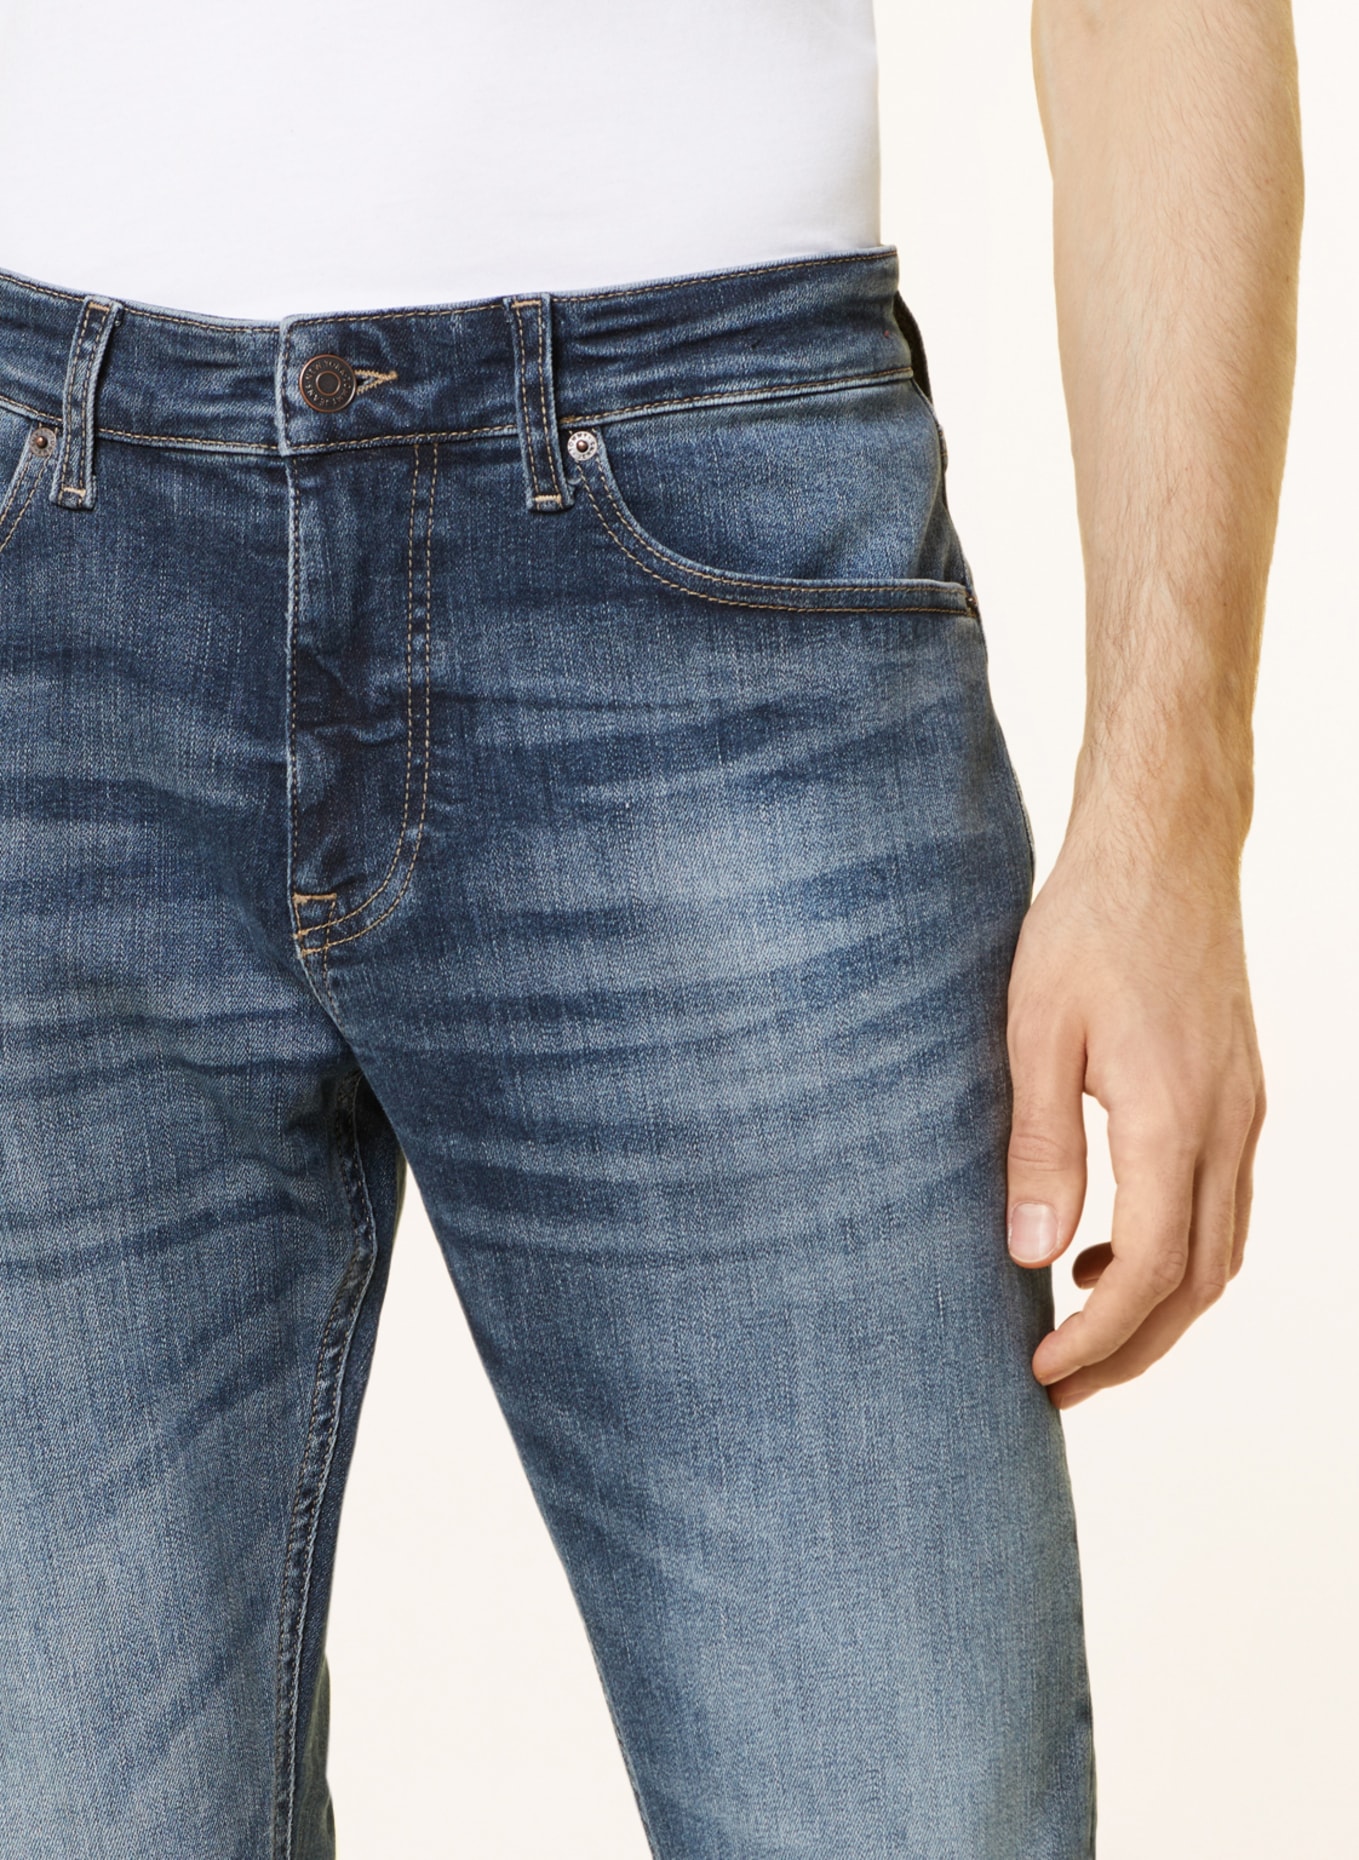 TOMMY JEANS Jeans AUSTIN Tapered Fit, Farbe: 1BK Denim Dark (Bild 5)